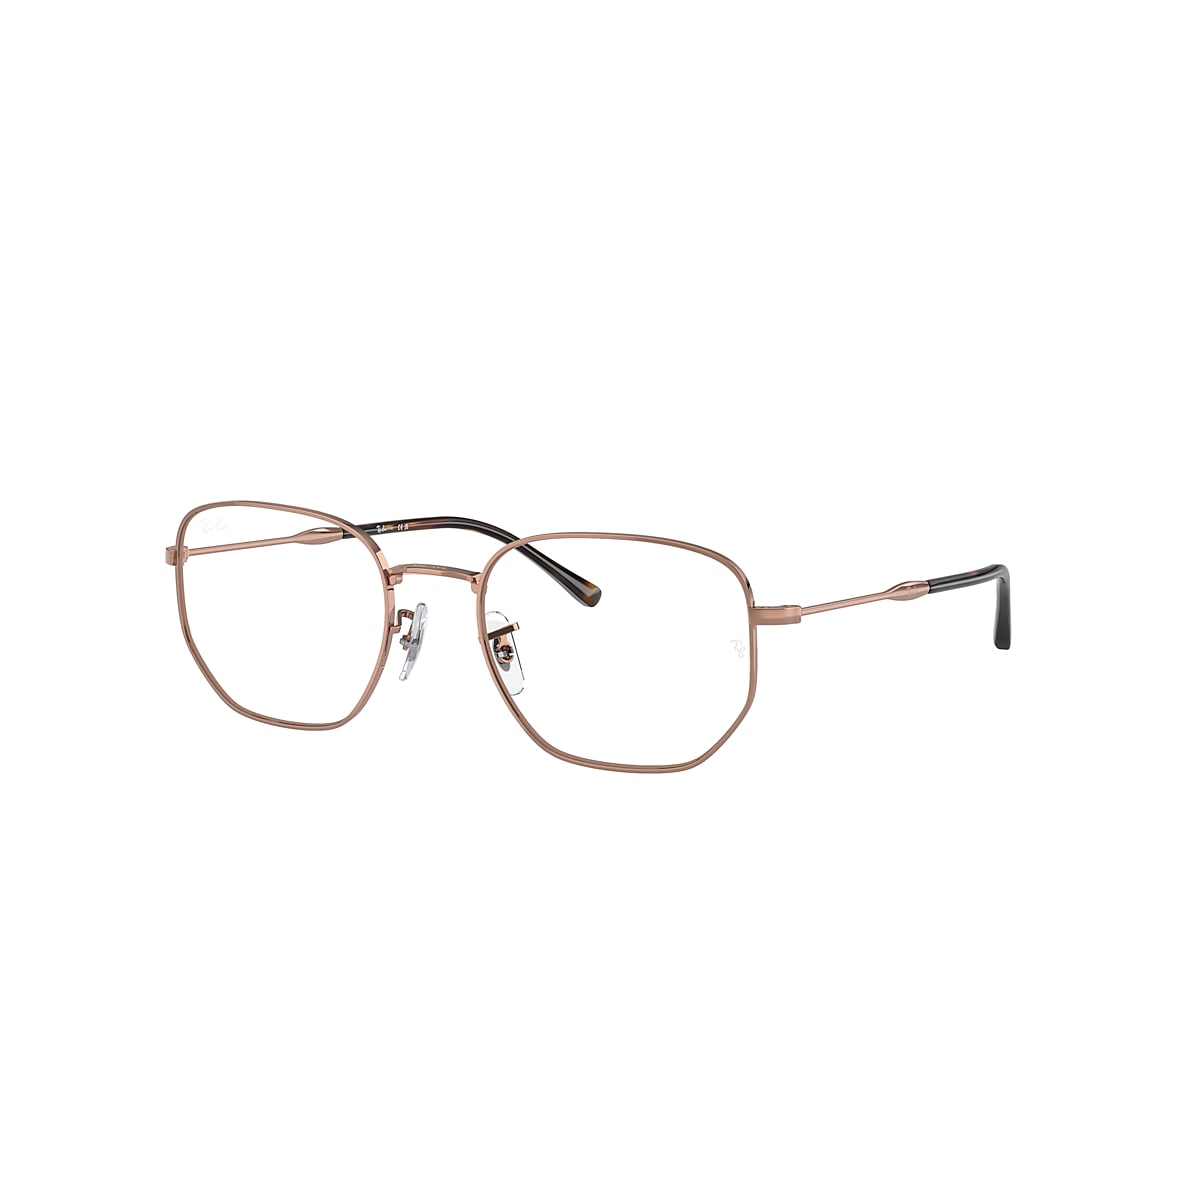 RB6496 OPTICS Eyeglasses with Rose Gold Frame - RB6496 | Ray-Ban® US